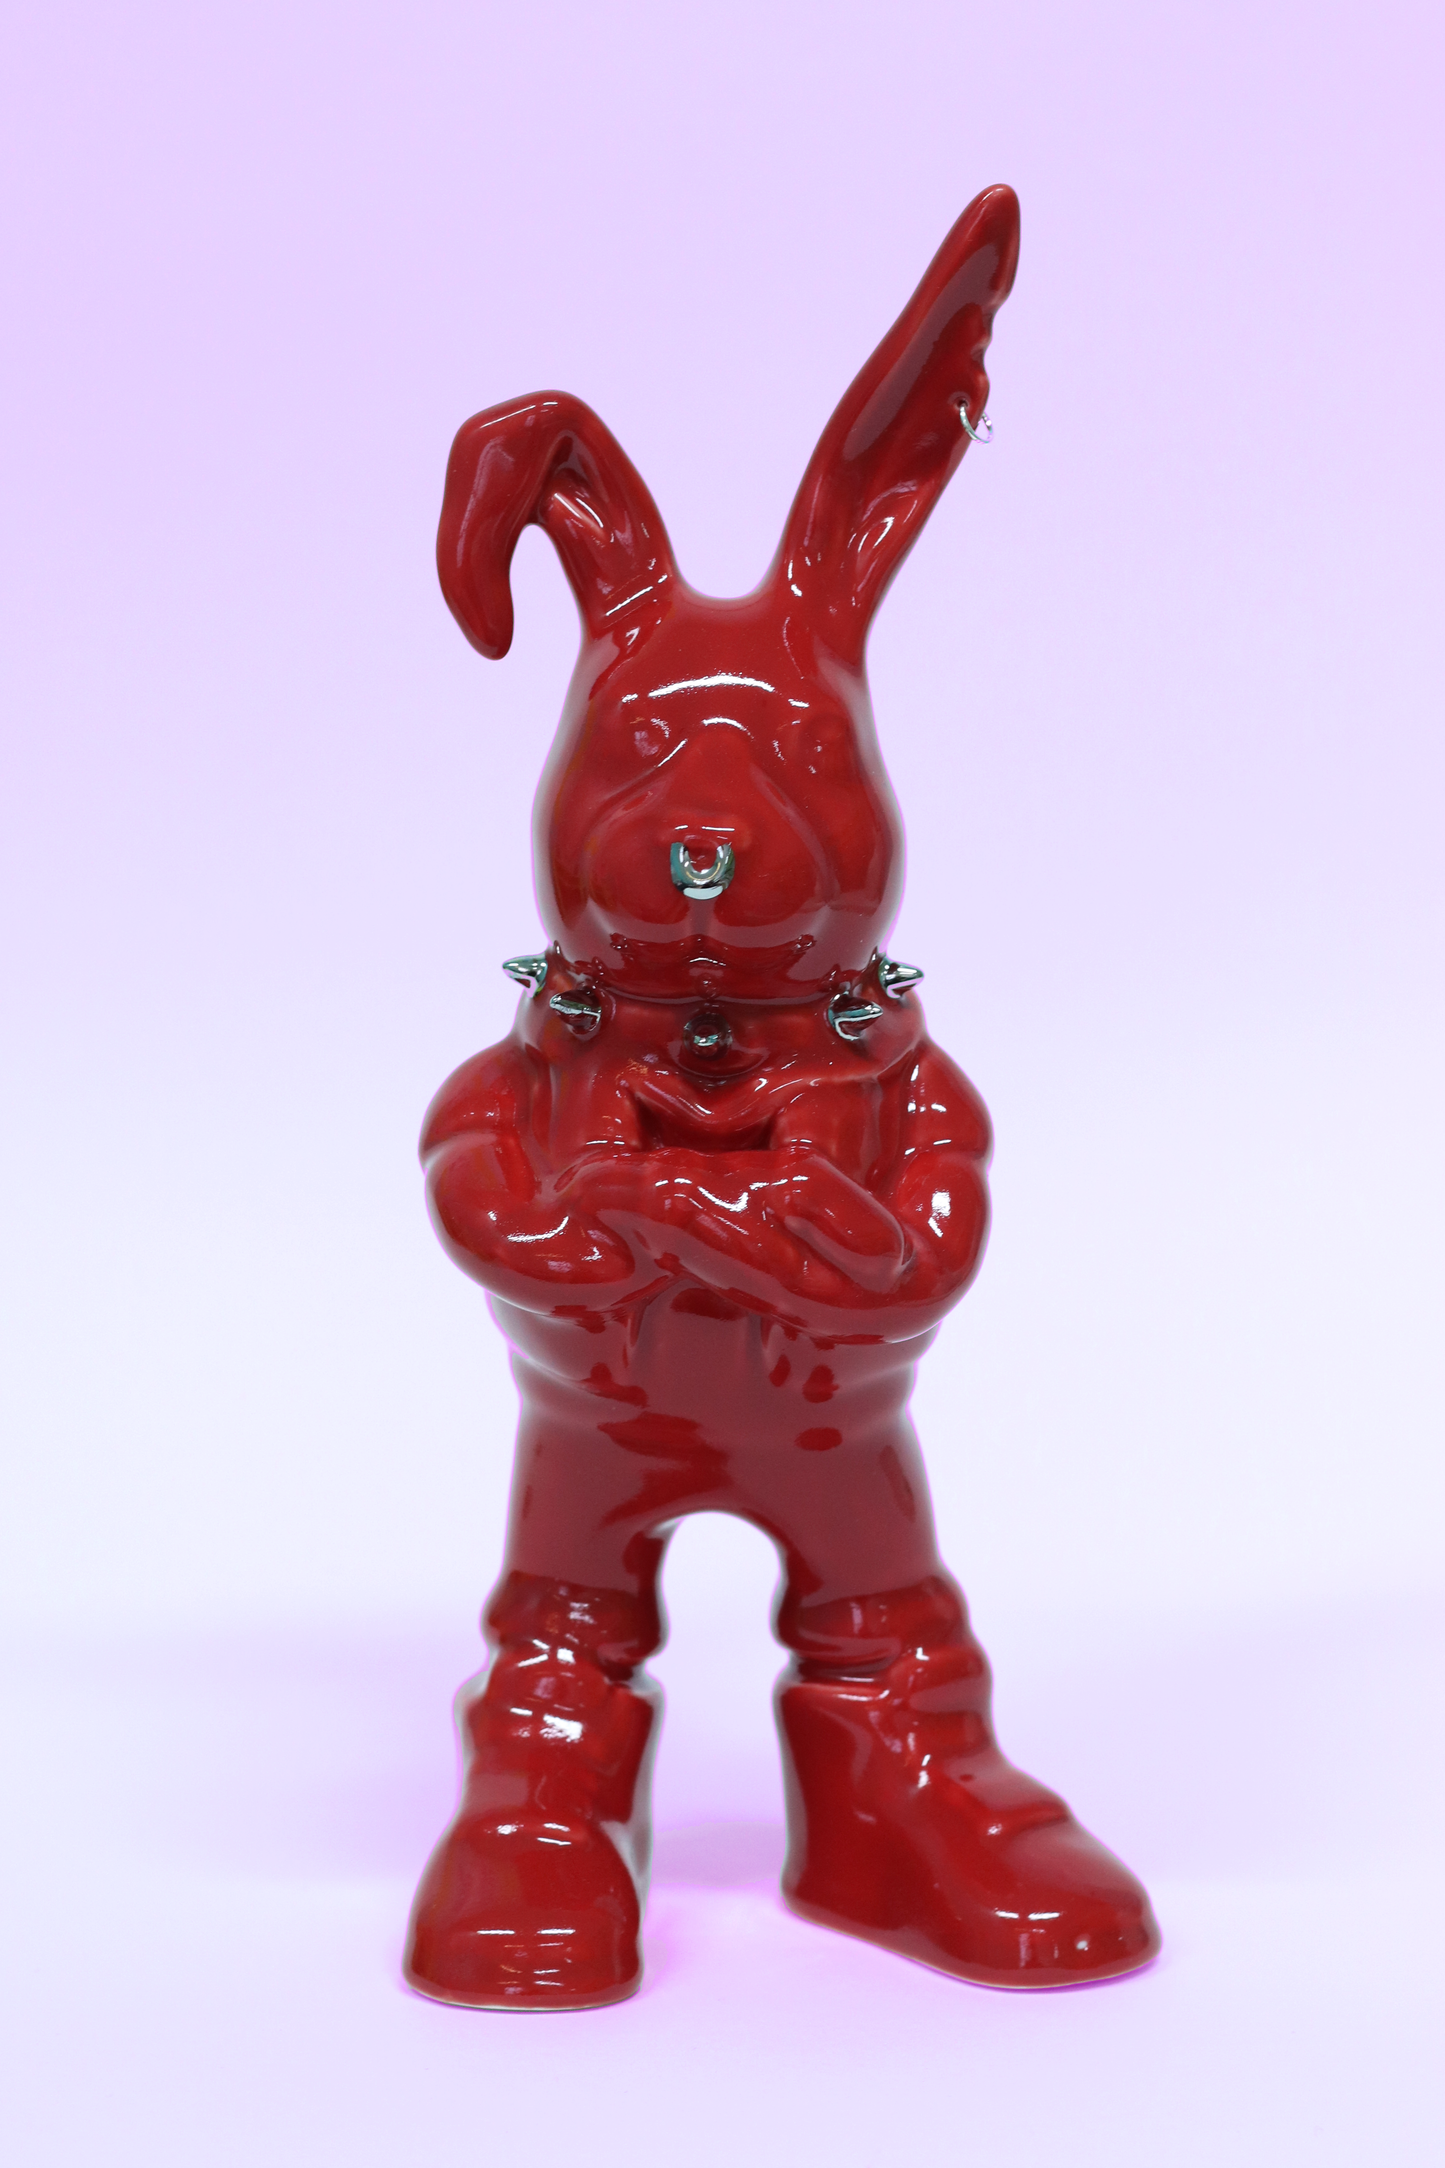 Tuulikki Bunny - red ceramic artwork